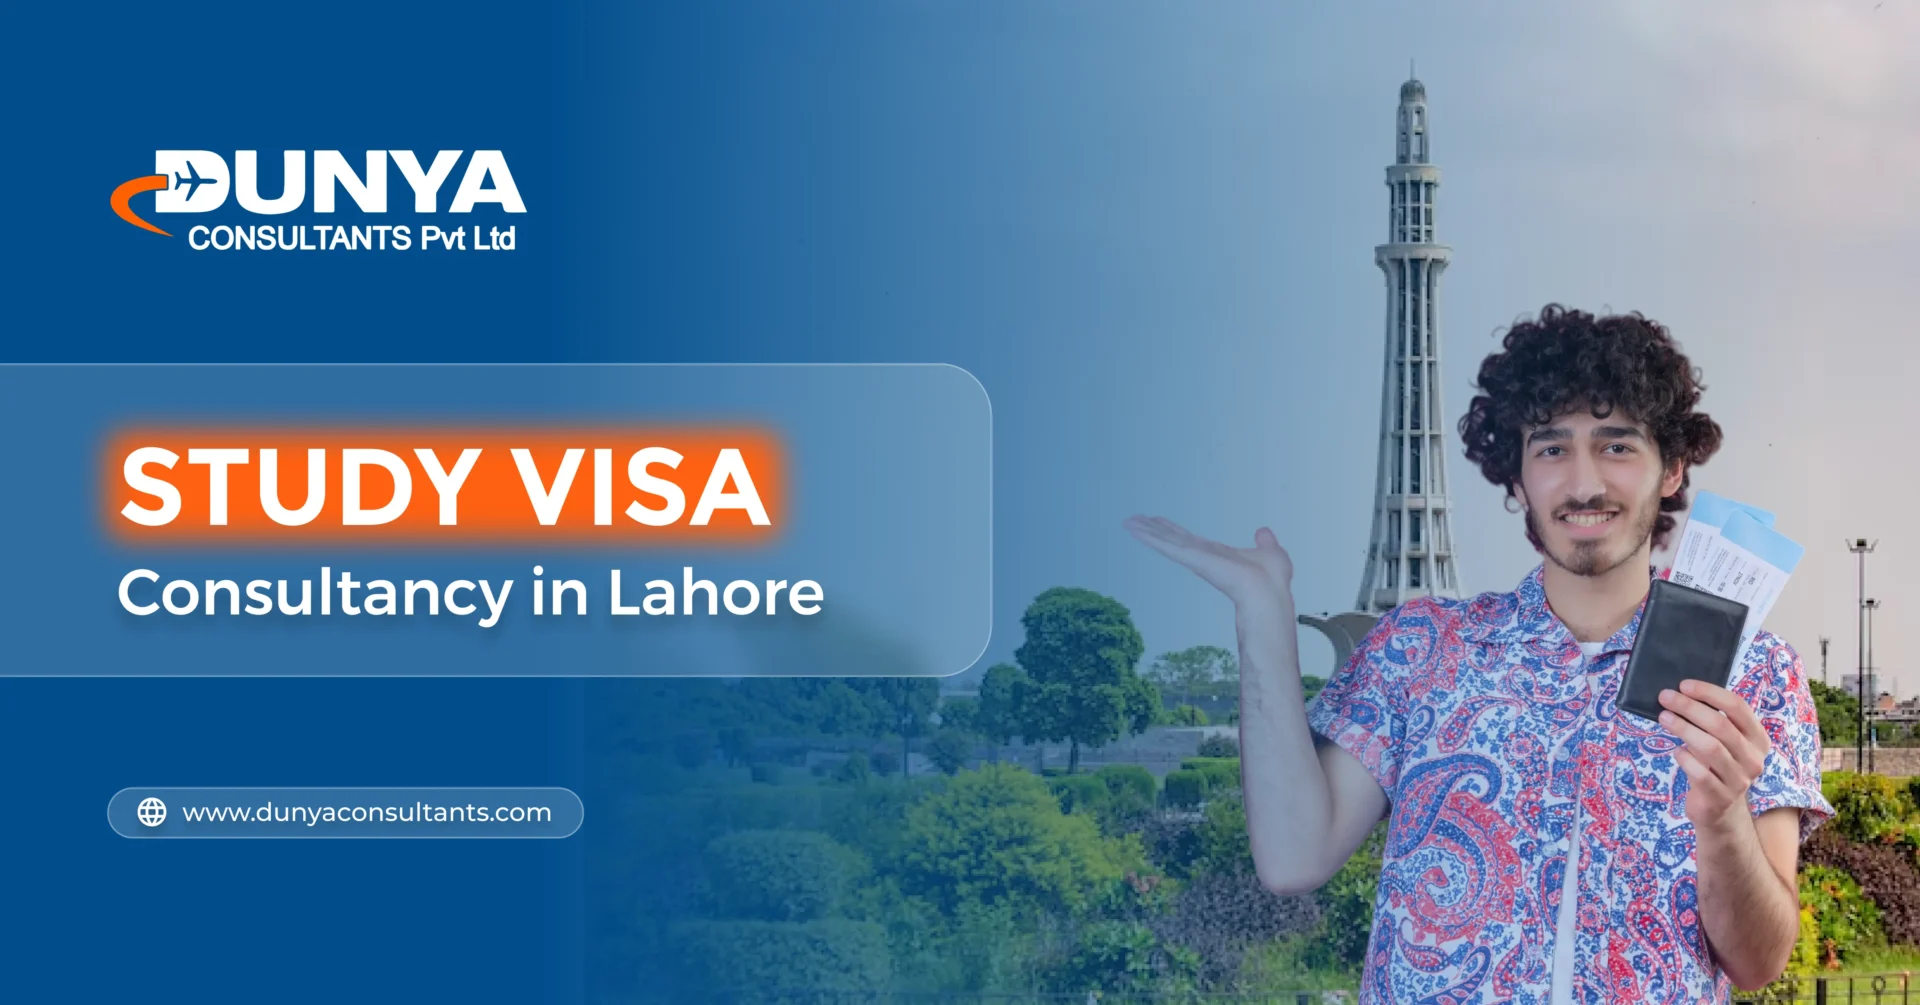 Study Visa Consultancy in Lahore - Dunya Consultants